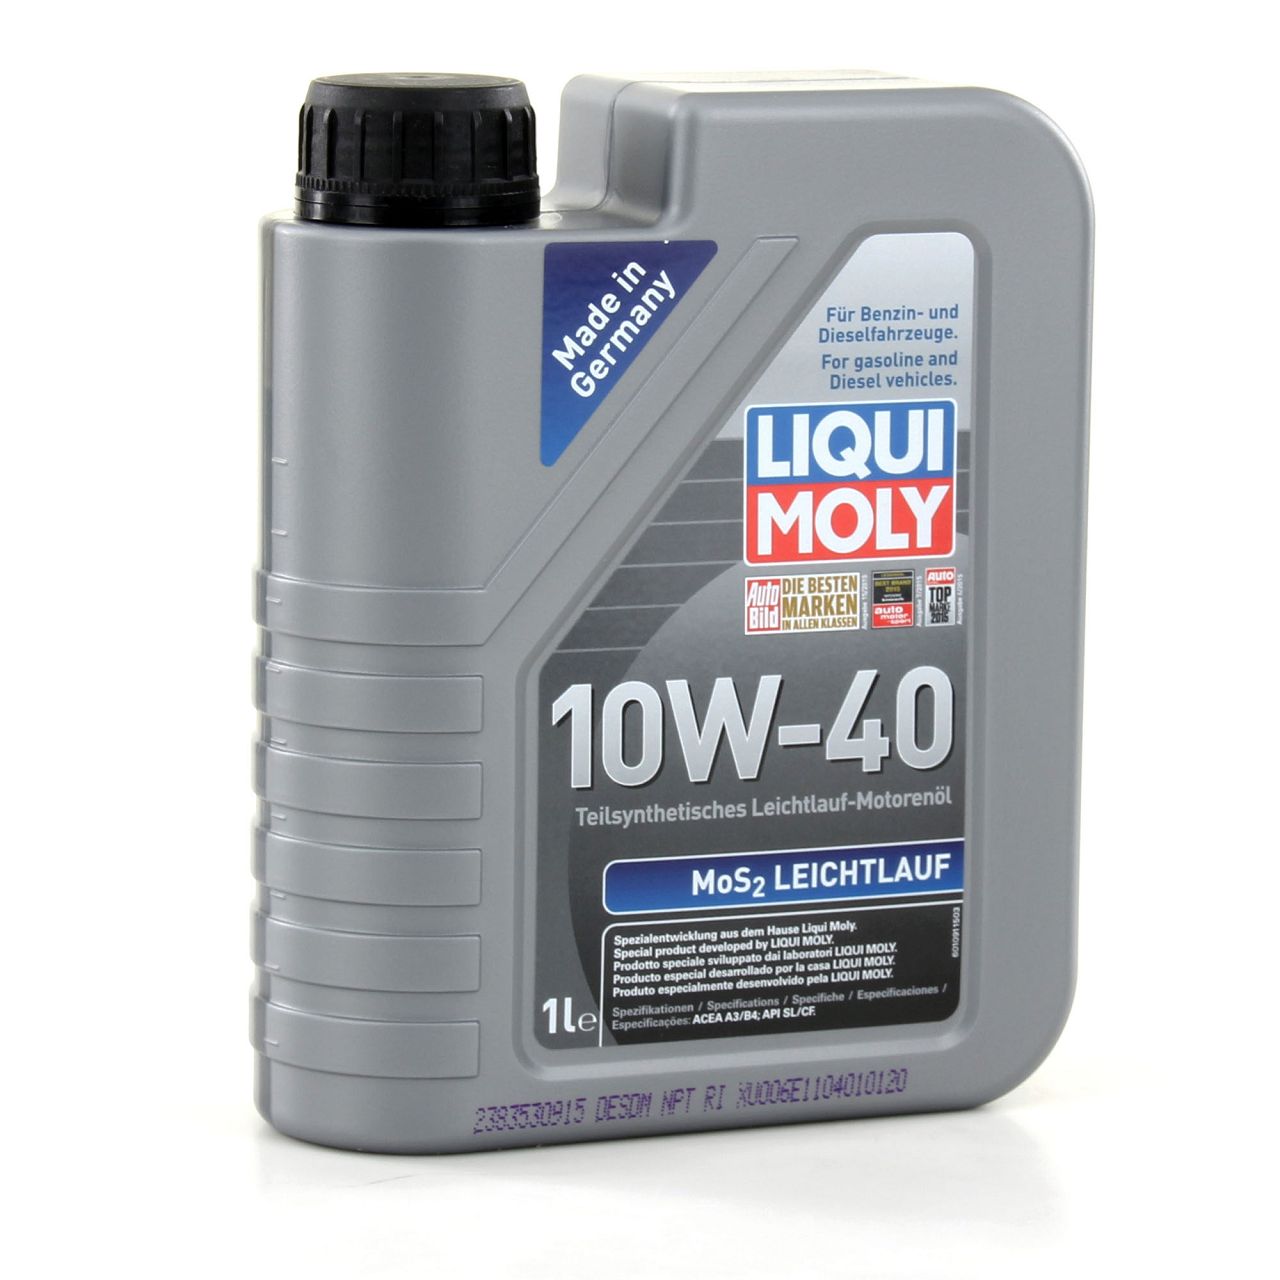 LIQUI MOLY Motoröl Öl MoS2 LEICHTLAUF 10W40 10W-40 3L 3Liter 1091